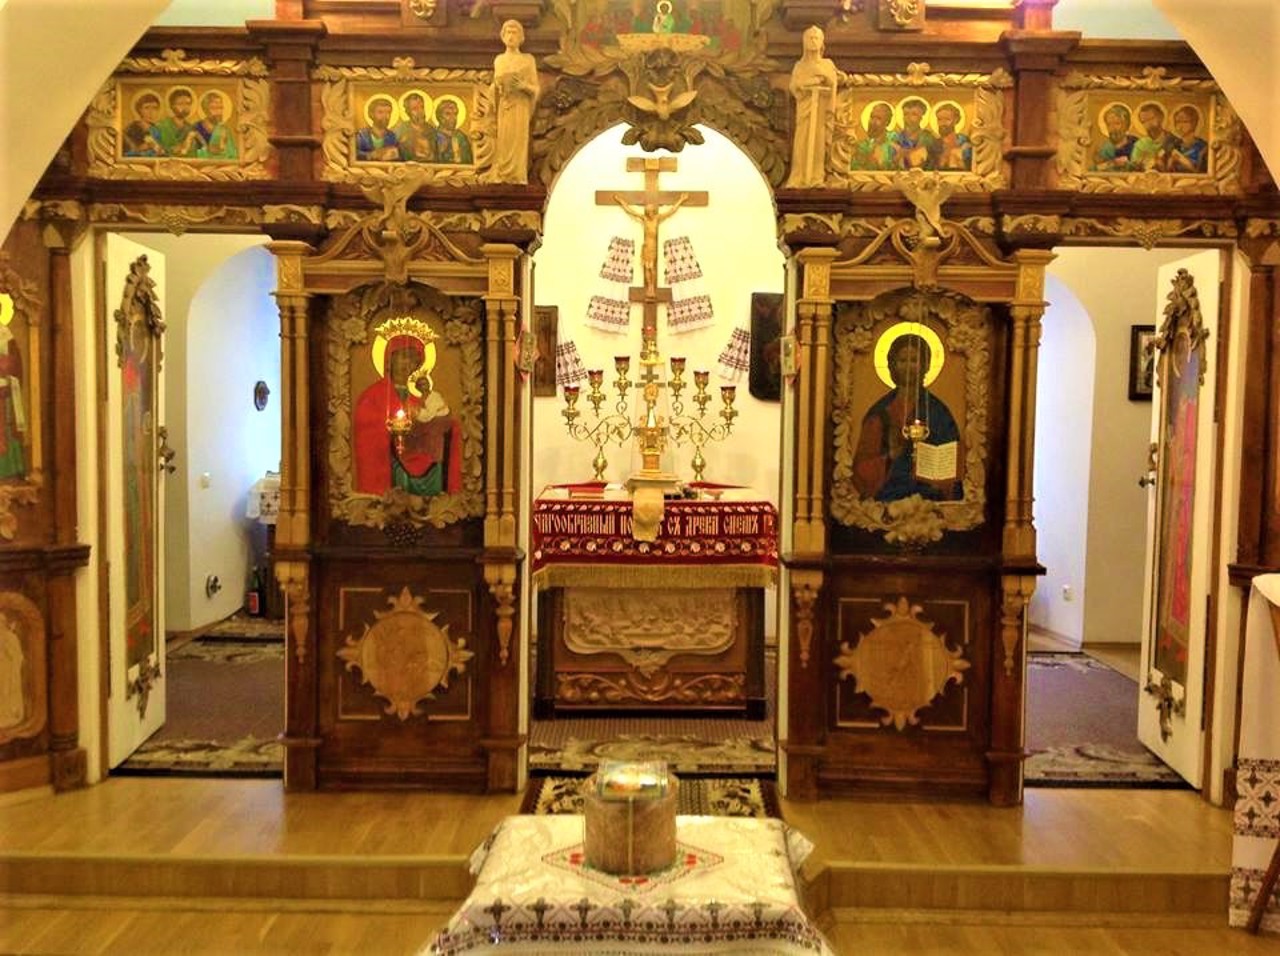 Nicholas the Good Church, Kyiv